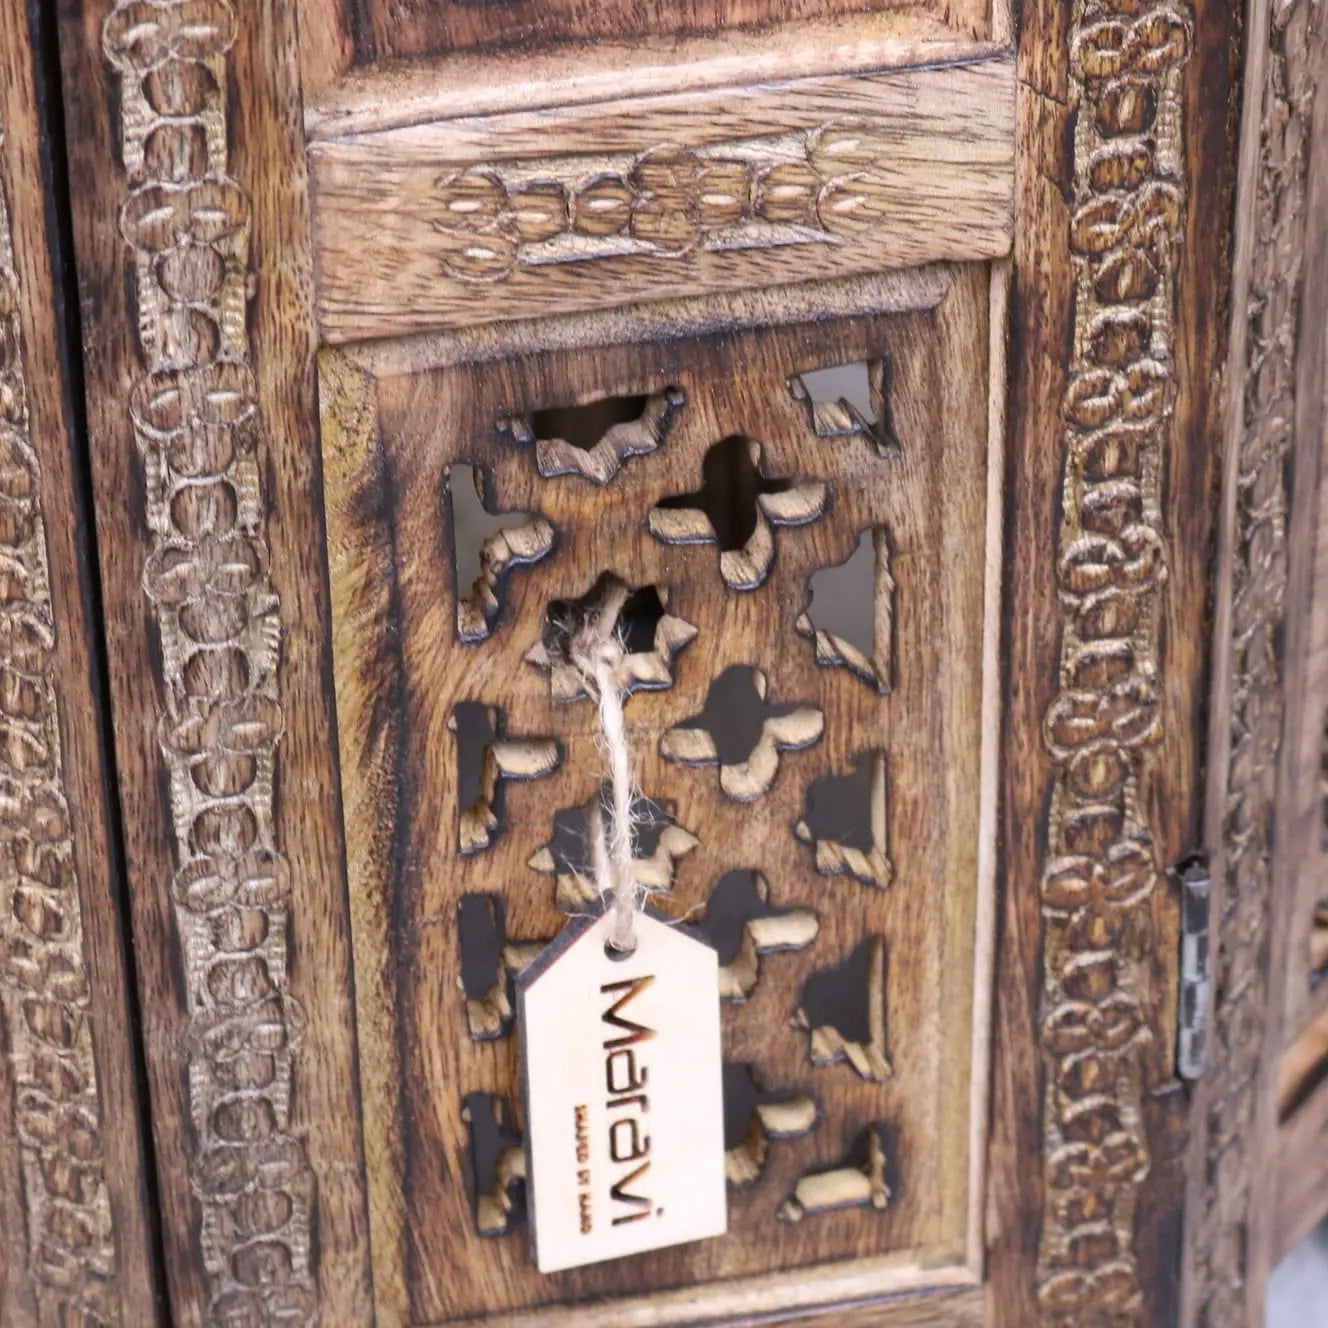 Zanskar Small Side Table - Closeup of Base Carving